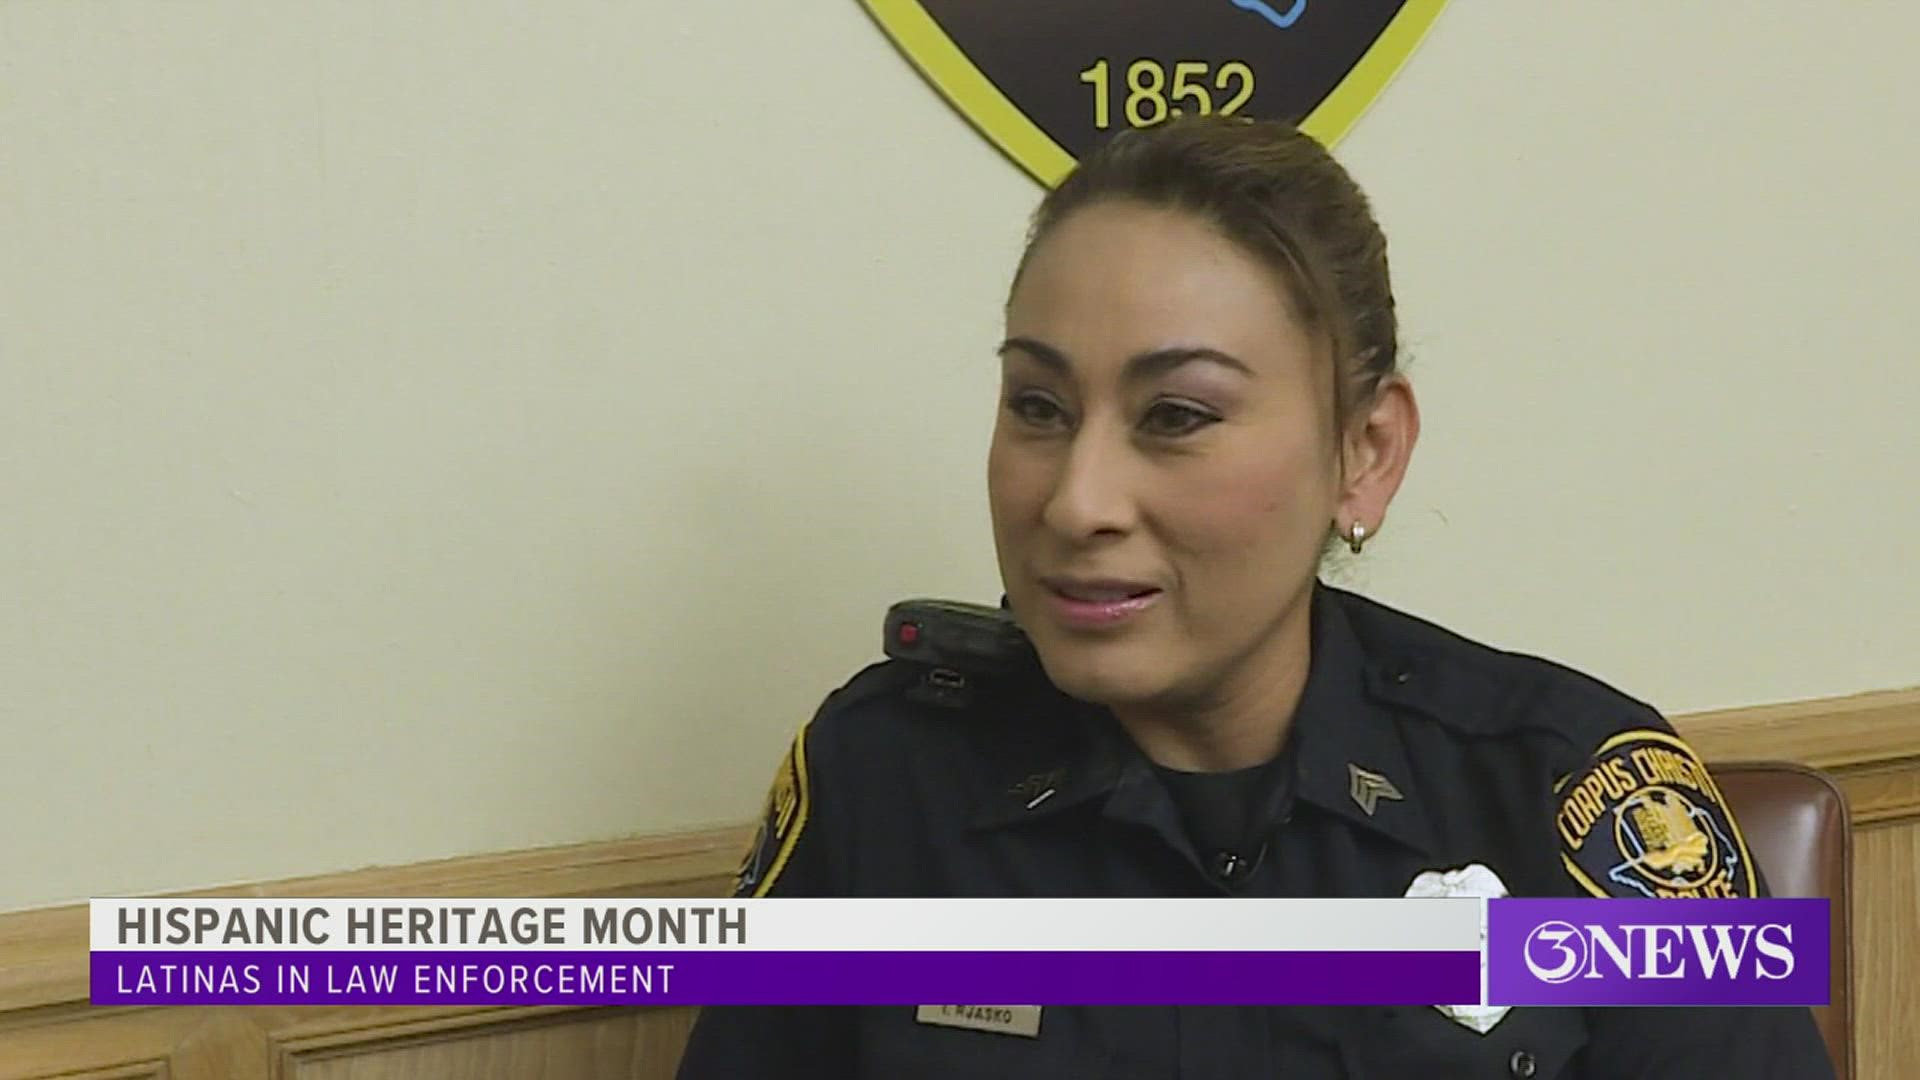 Lieutenant Emily Perez and Senior Officer Imelda Benavidez Rjasko both hold important positions within the Corpus Christi Police Department.